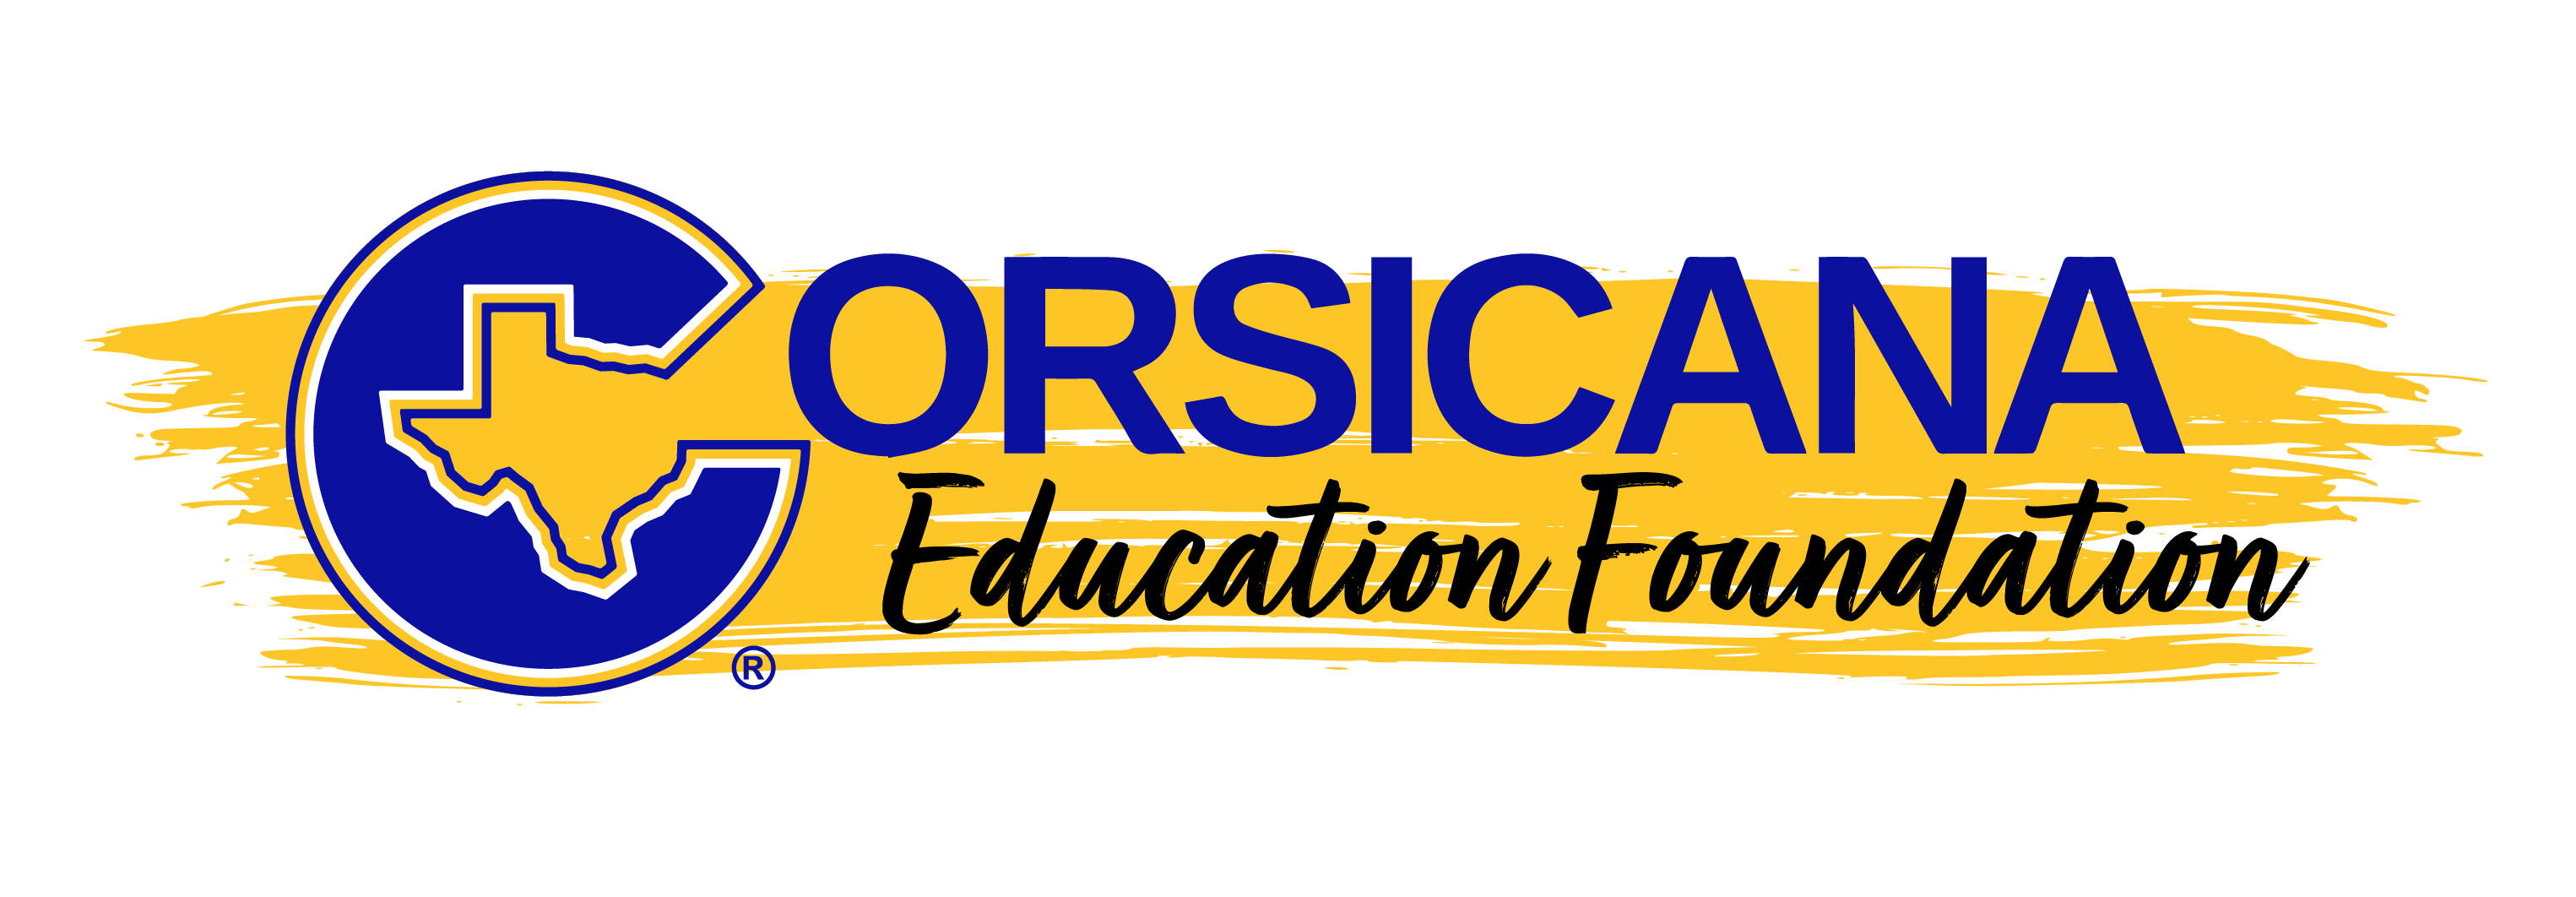 Corsicana Isd Education Foundation Inc.